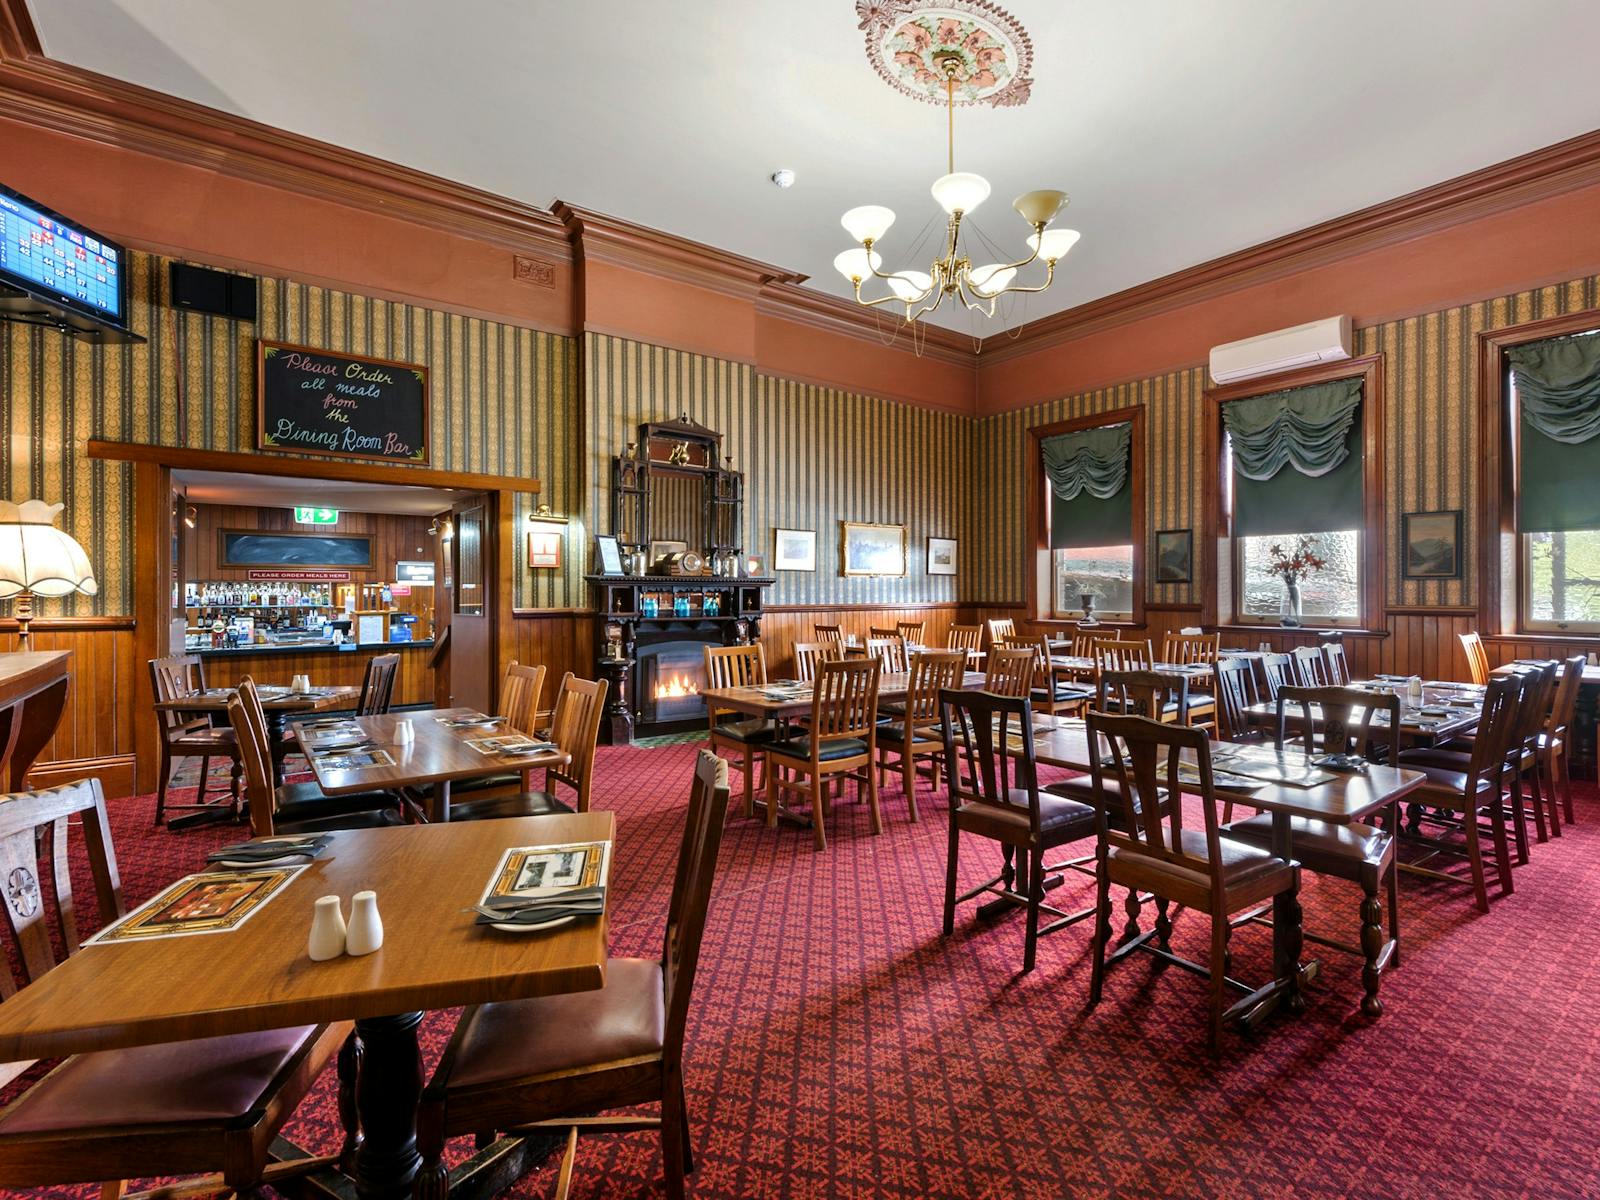 Empire Hotel | All accommodation | Discover Tasmania